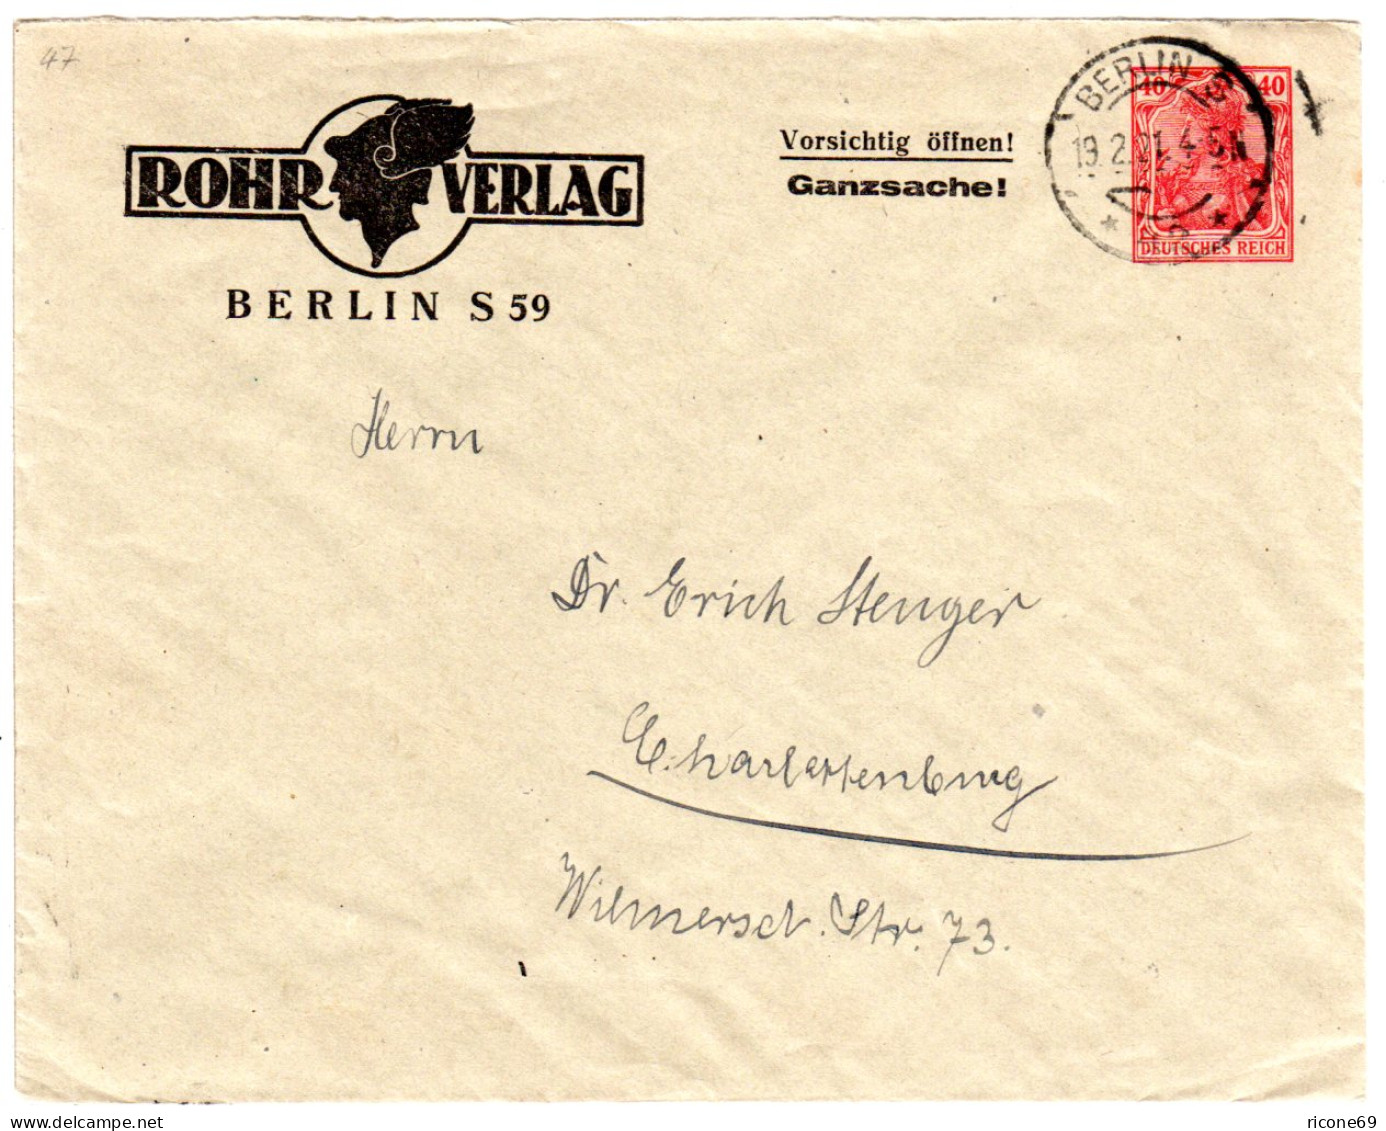 DR 1921, Sauber Gebr. 40 Pf. Germania Privatganzsache Brief Rohr Verlag Berlin - Covers & Documents